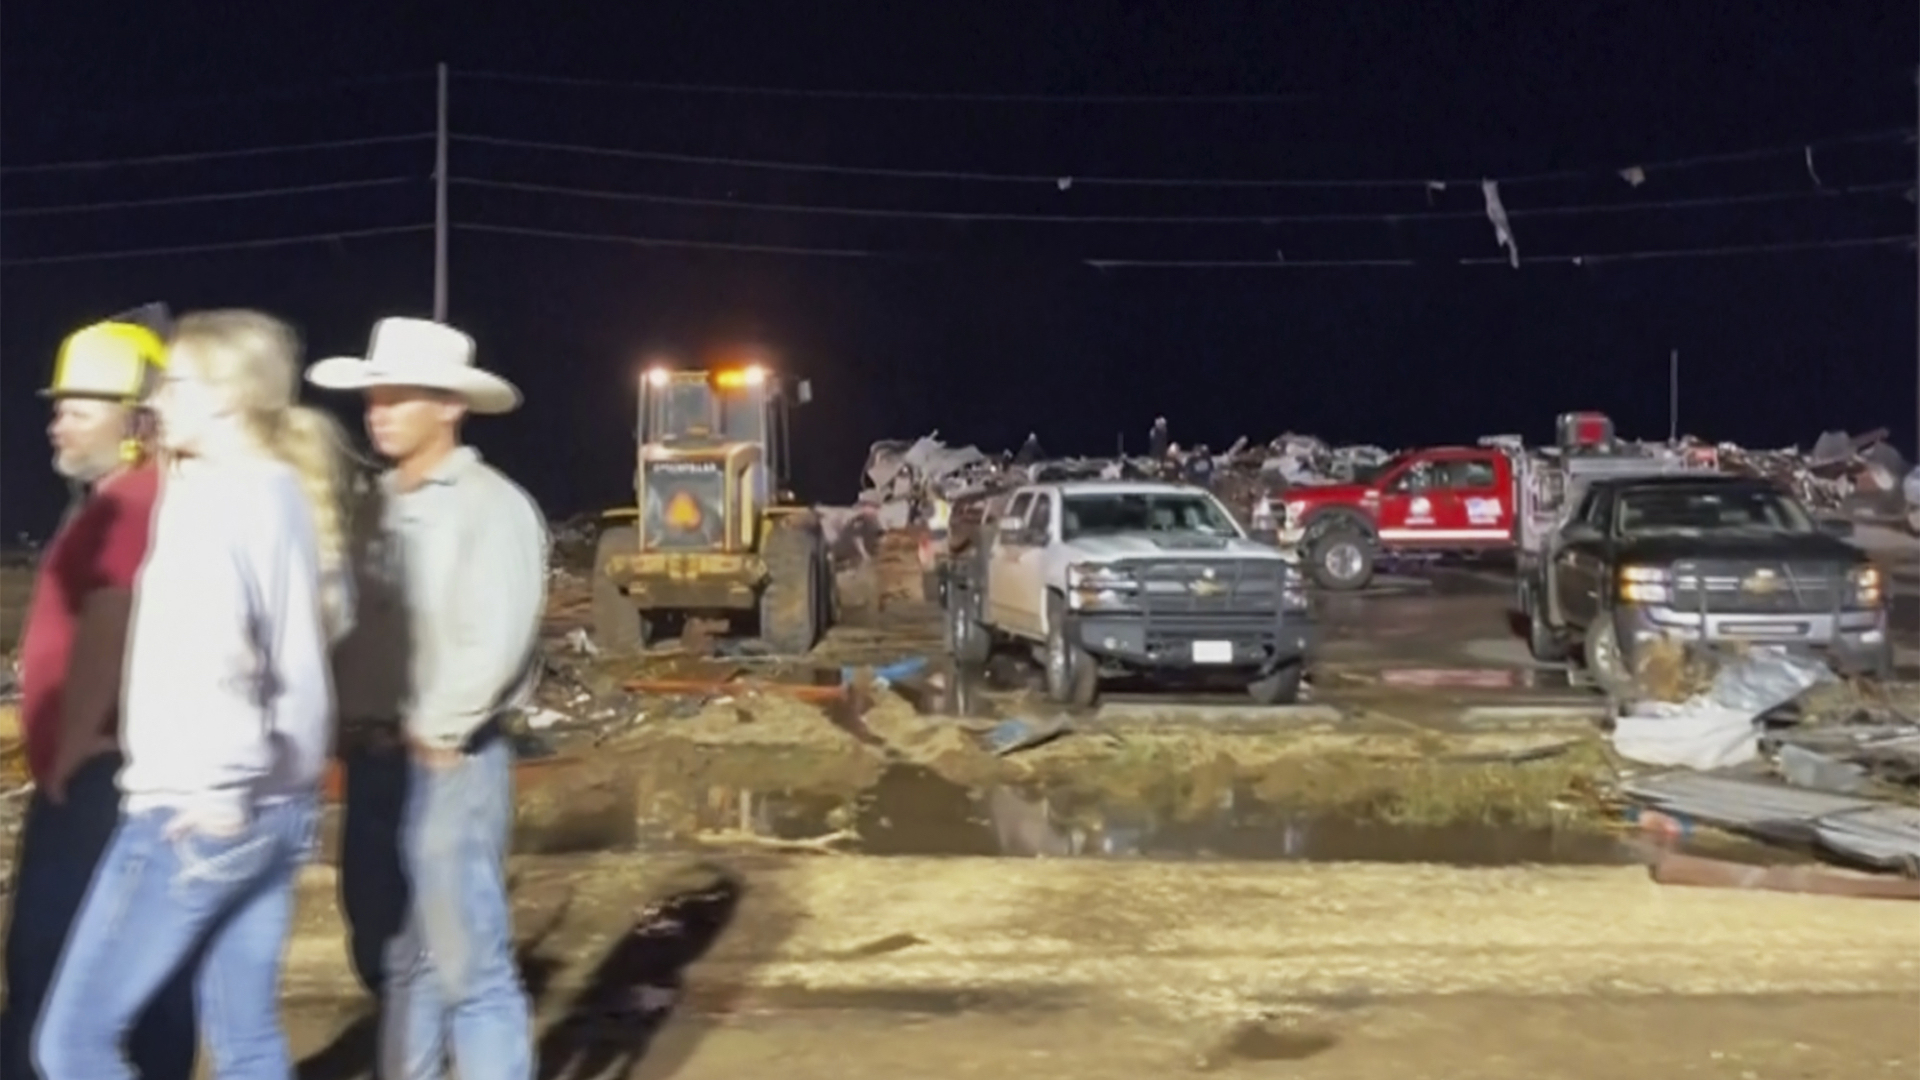 4 dead, 10 injured after tornado rips through Texas town (washingtonpost.com)